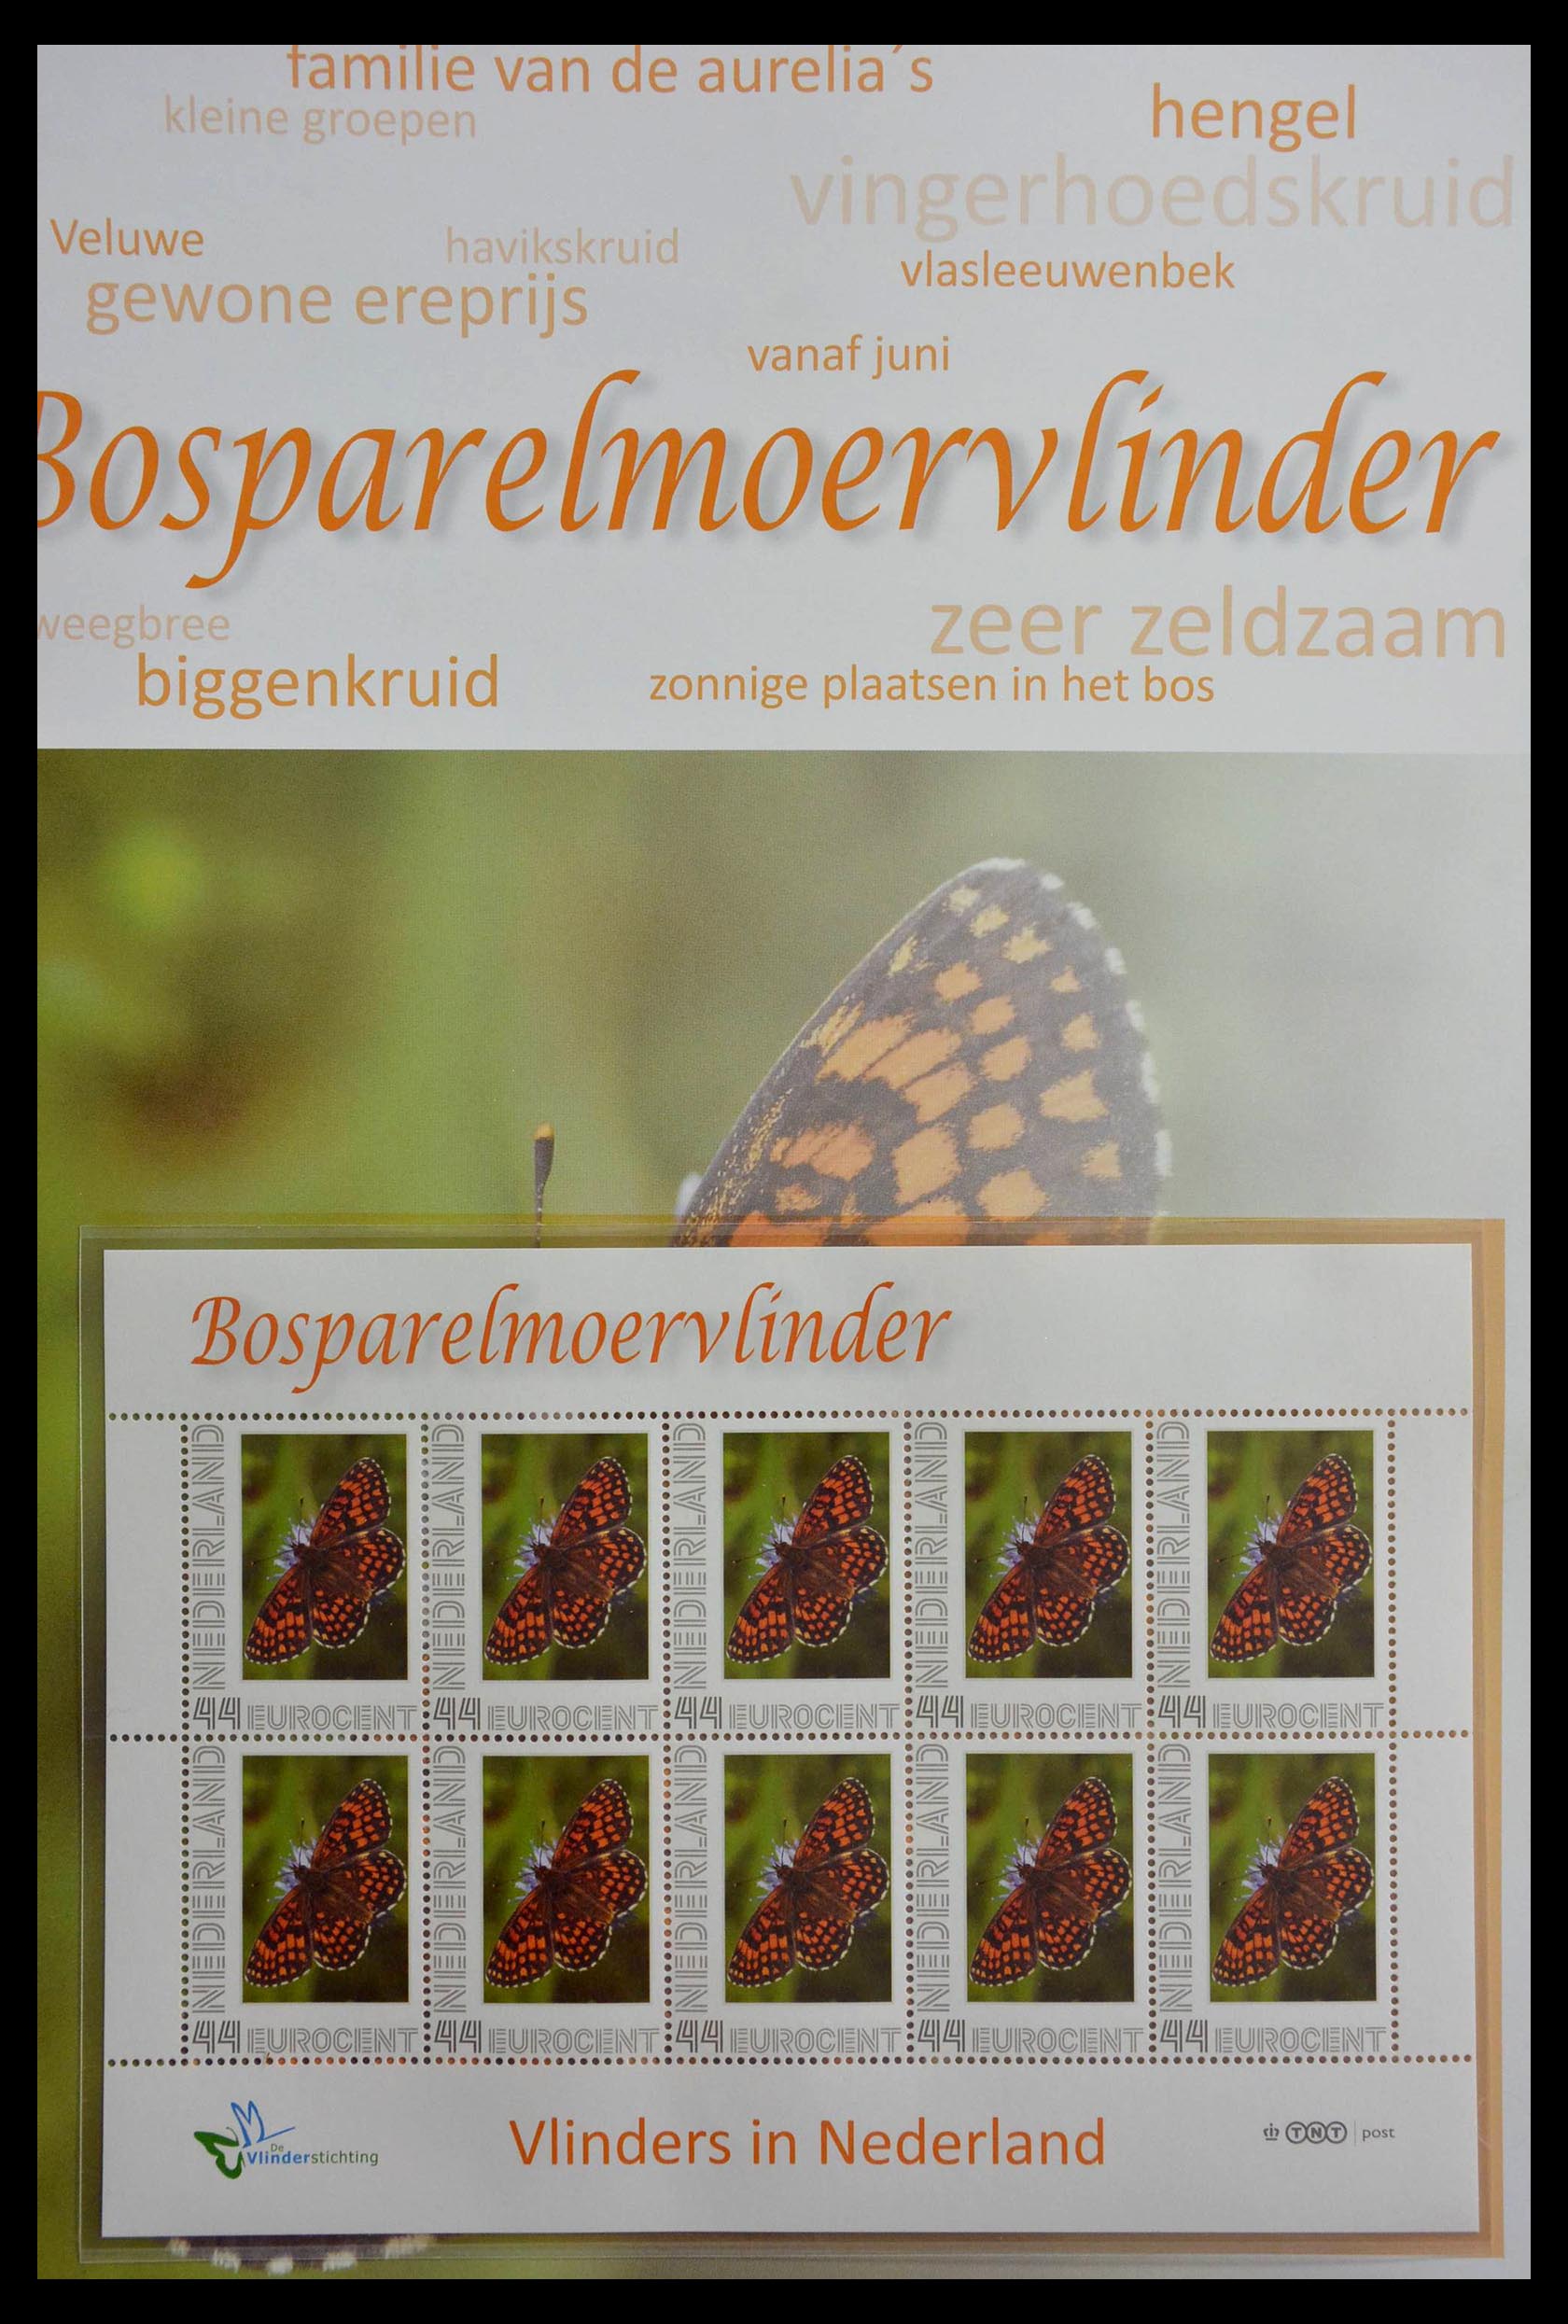 13105 002 - 13105 Butterflies in the Netherlands.